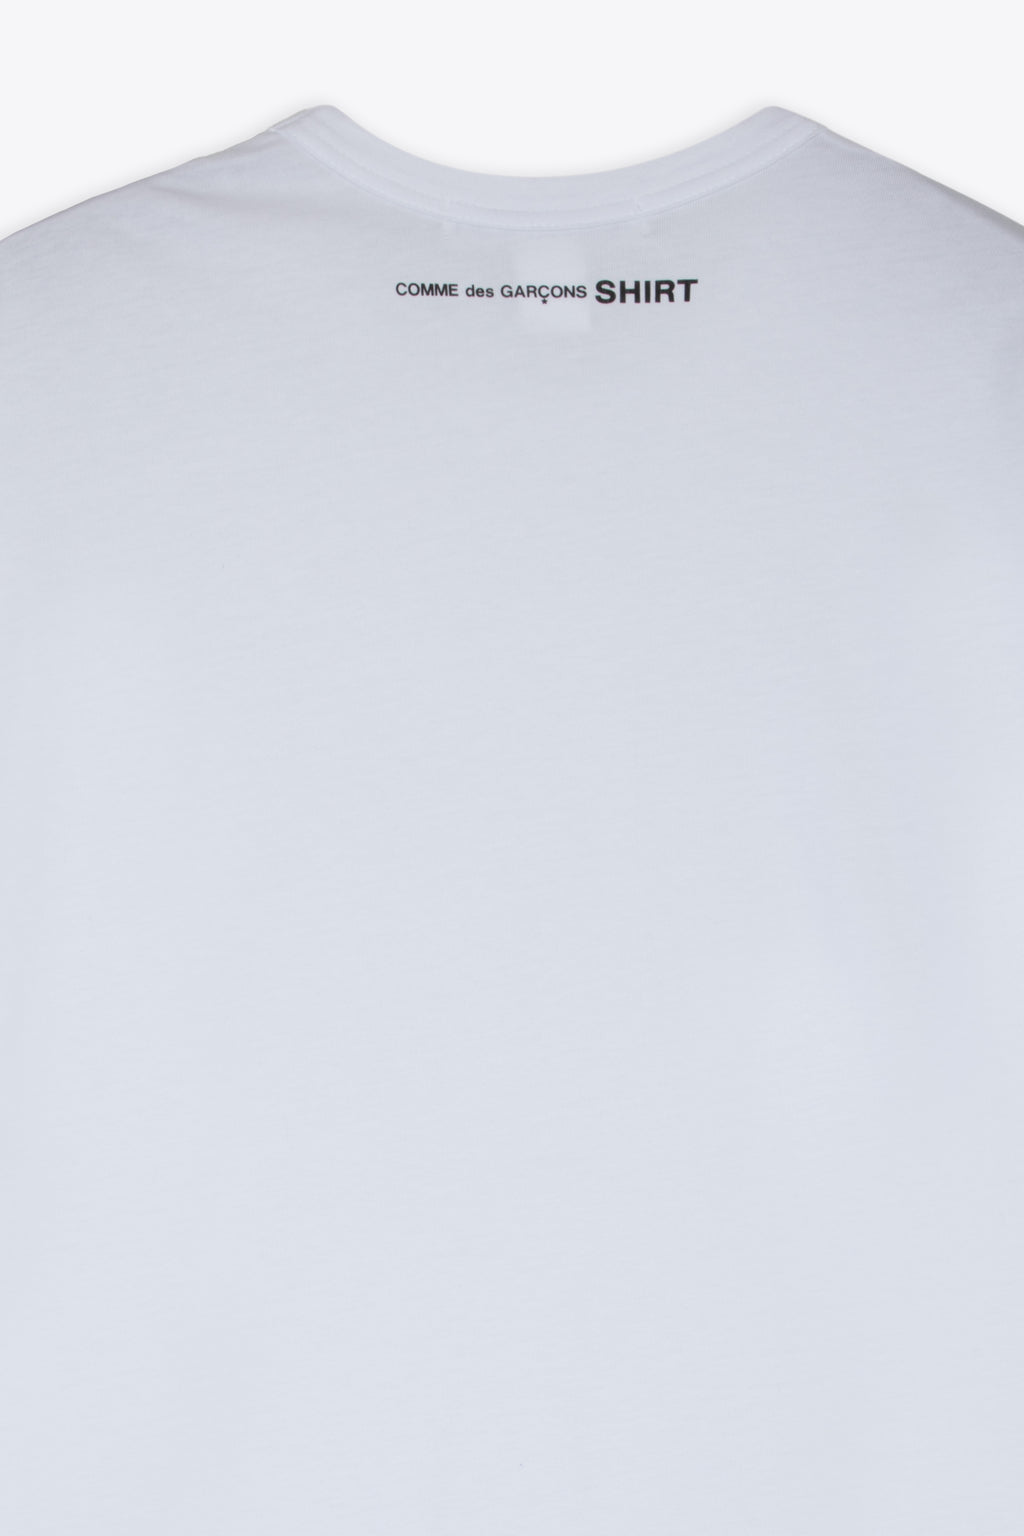 alt-image__T-shirt-bianca-oversize-in-cotone-con-logo-sul-retro